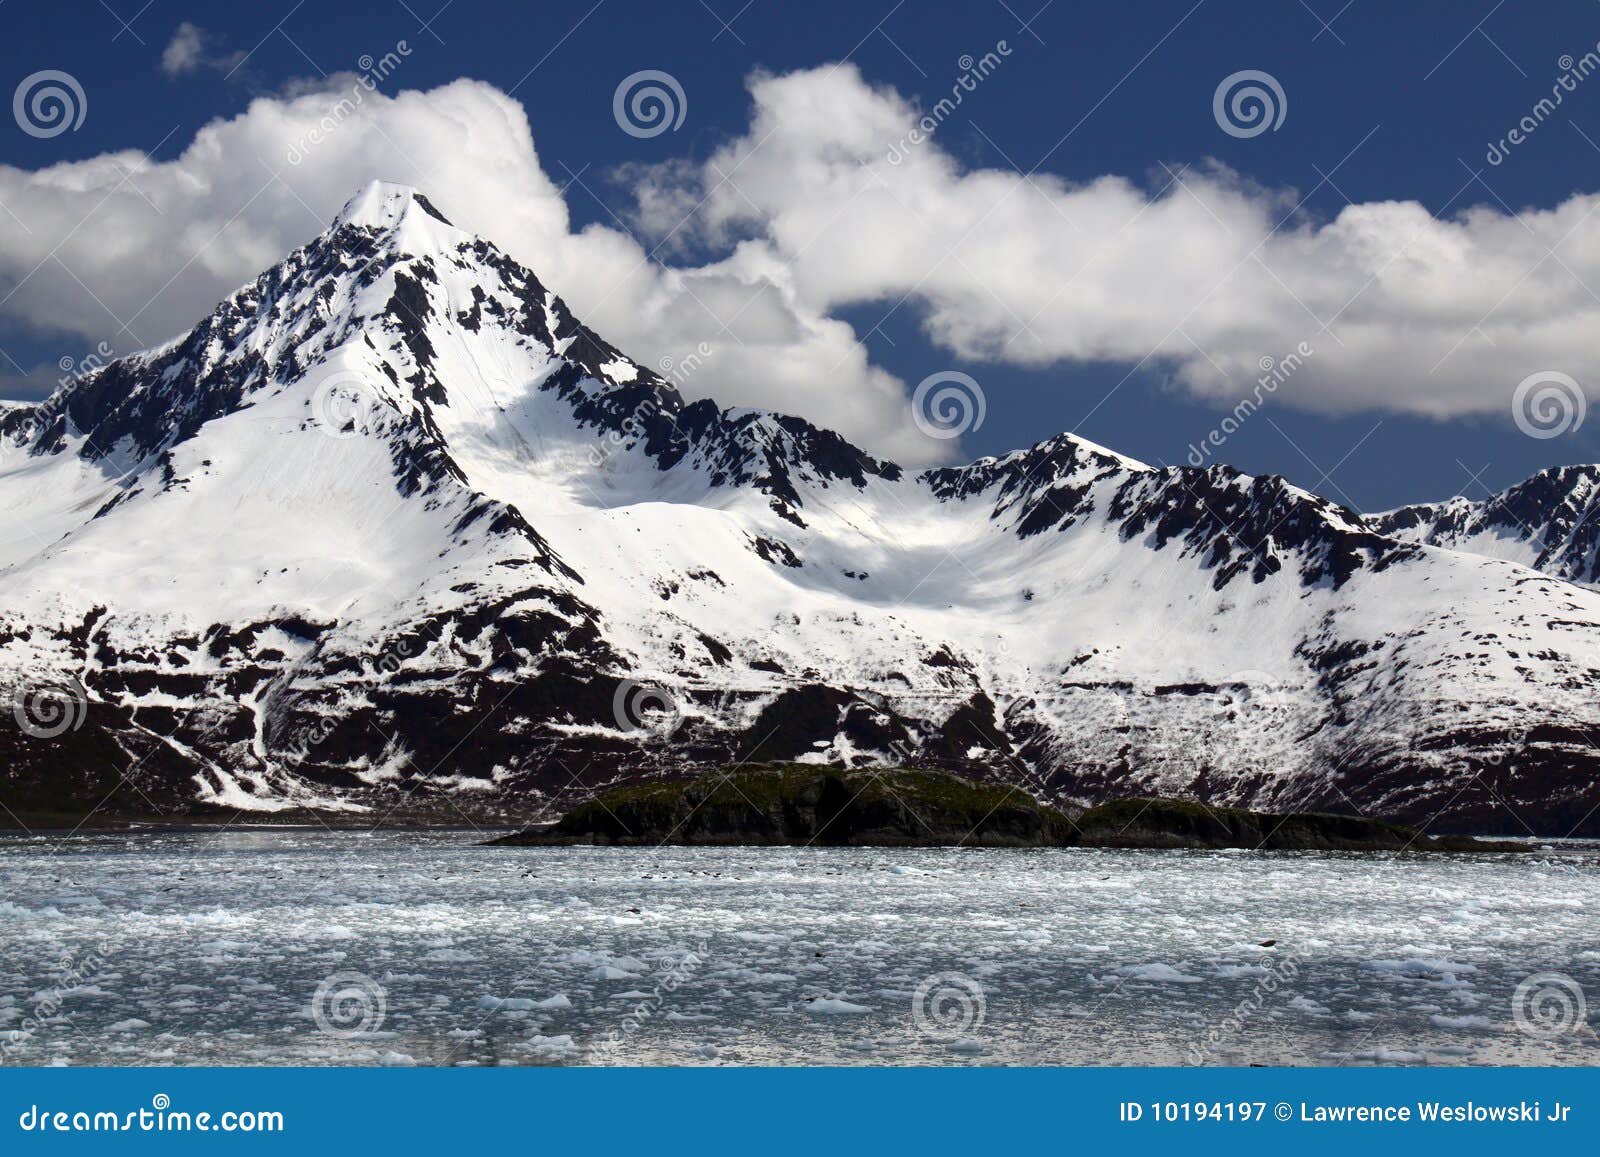 snow-capped mountains - kenai fjords national park